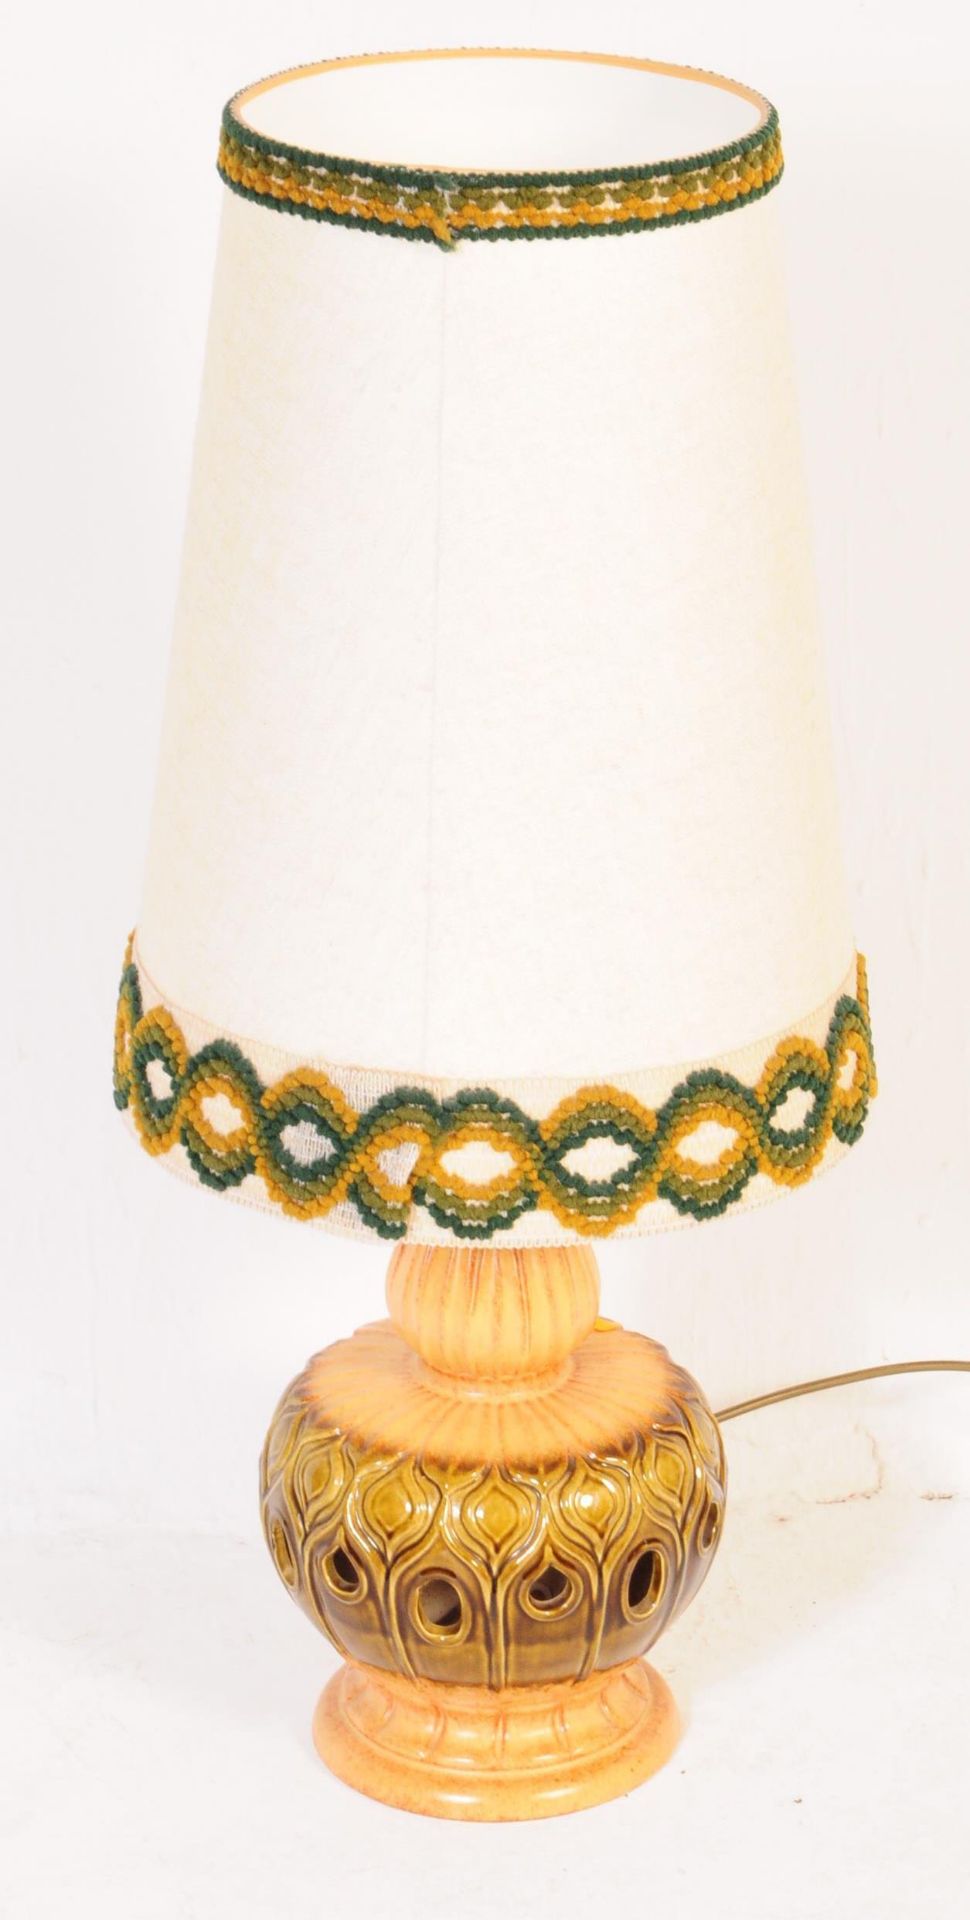 RETRO MID CENTURY WEST GERMAN POTTERY LAMP & VASE - Image 4 of 9